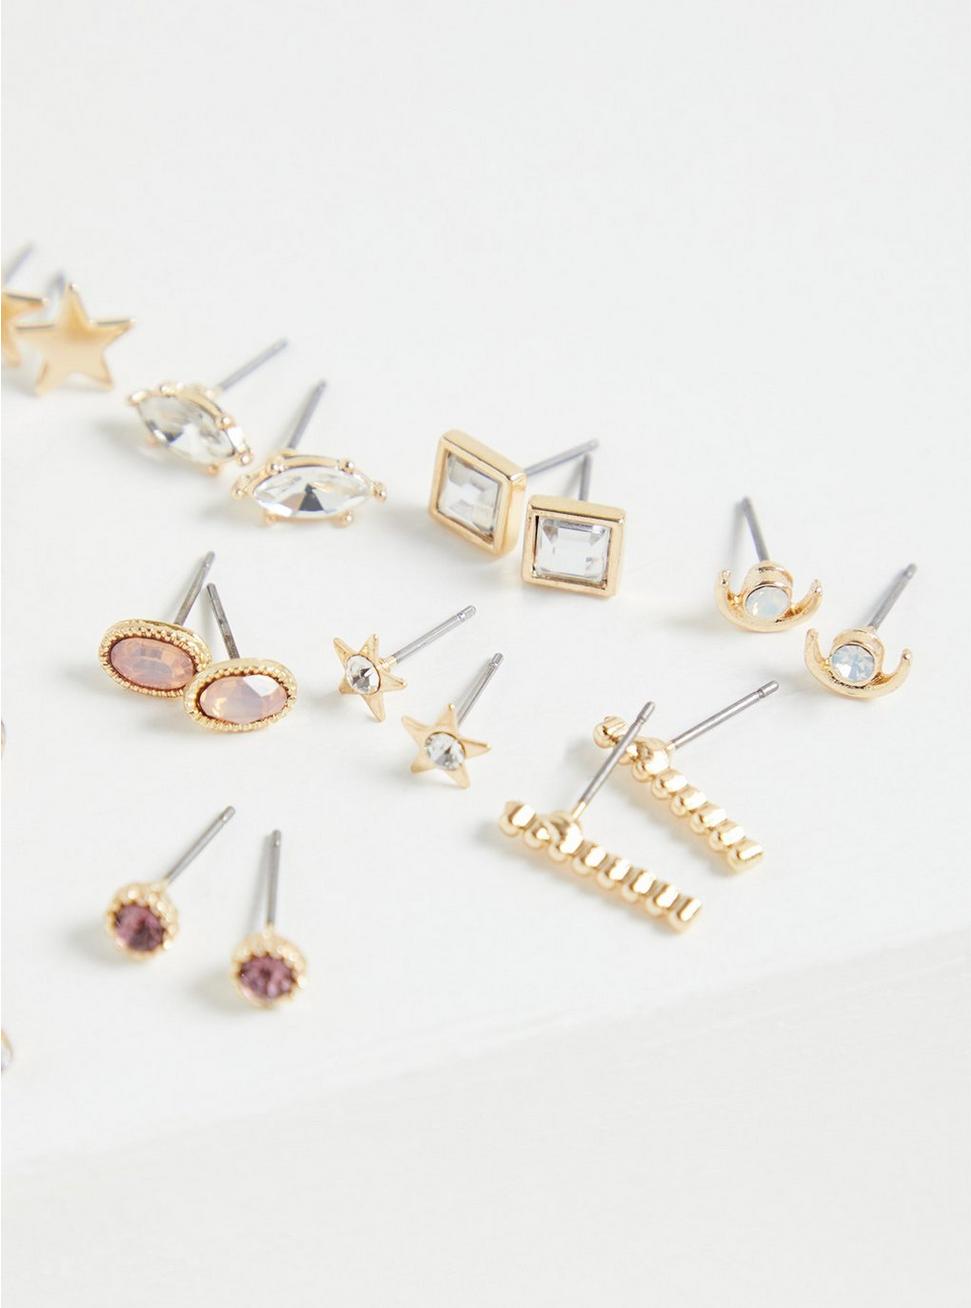 Plus Size - Gold-Tone Celestial Earring Set - Set of 15 - Torrid